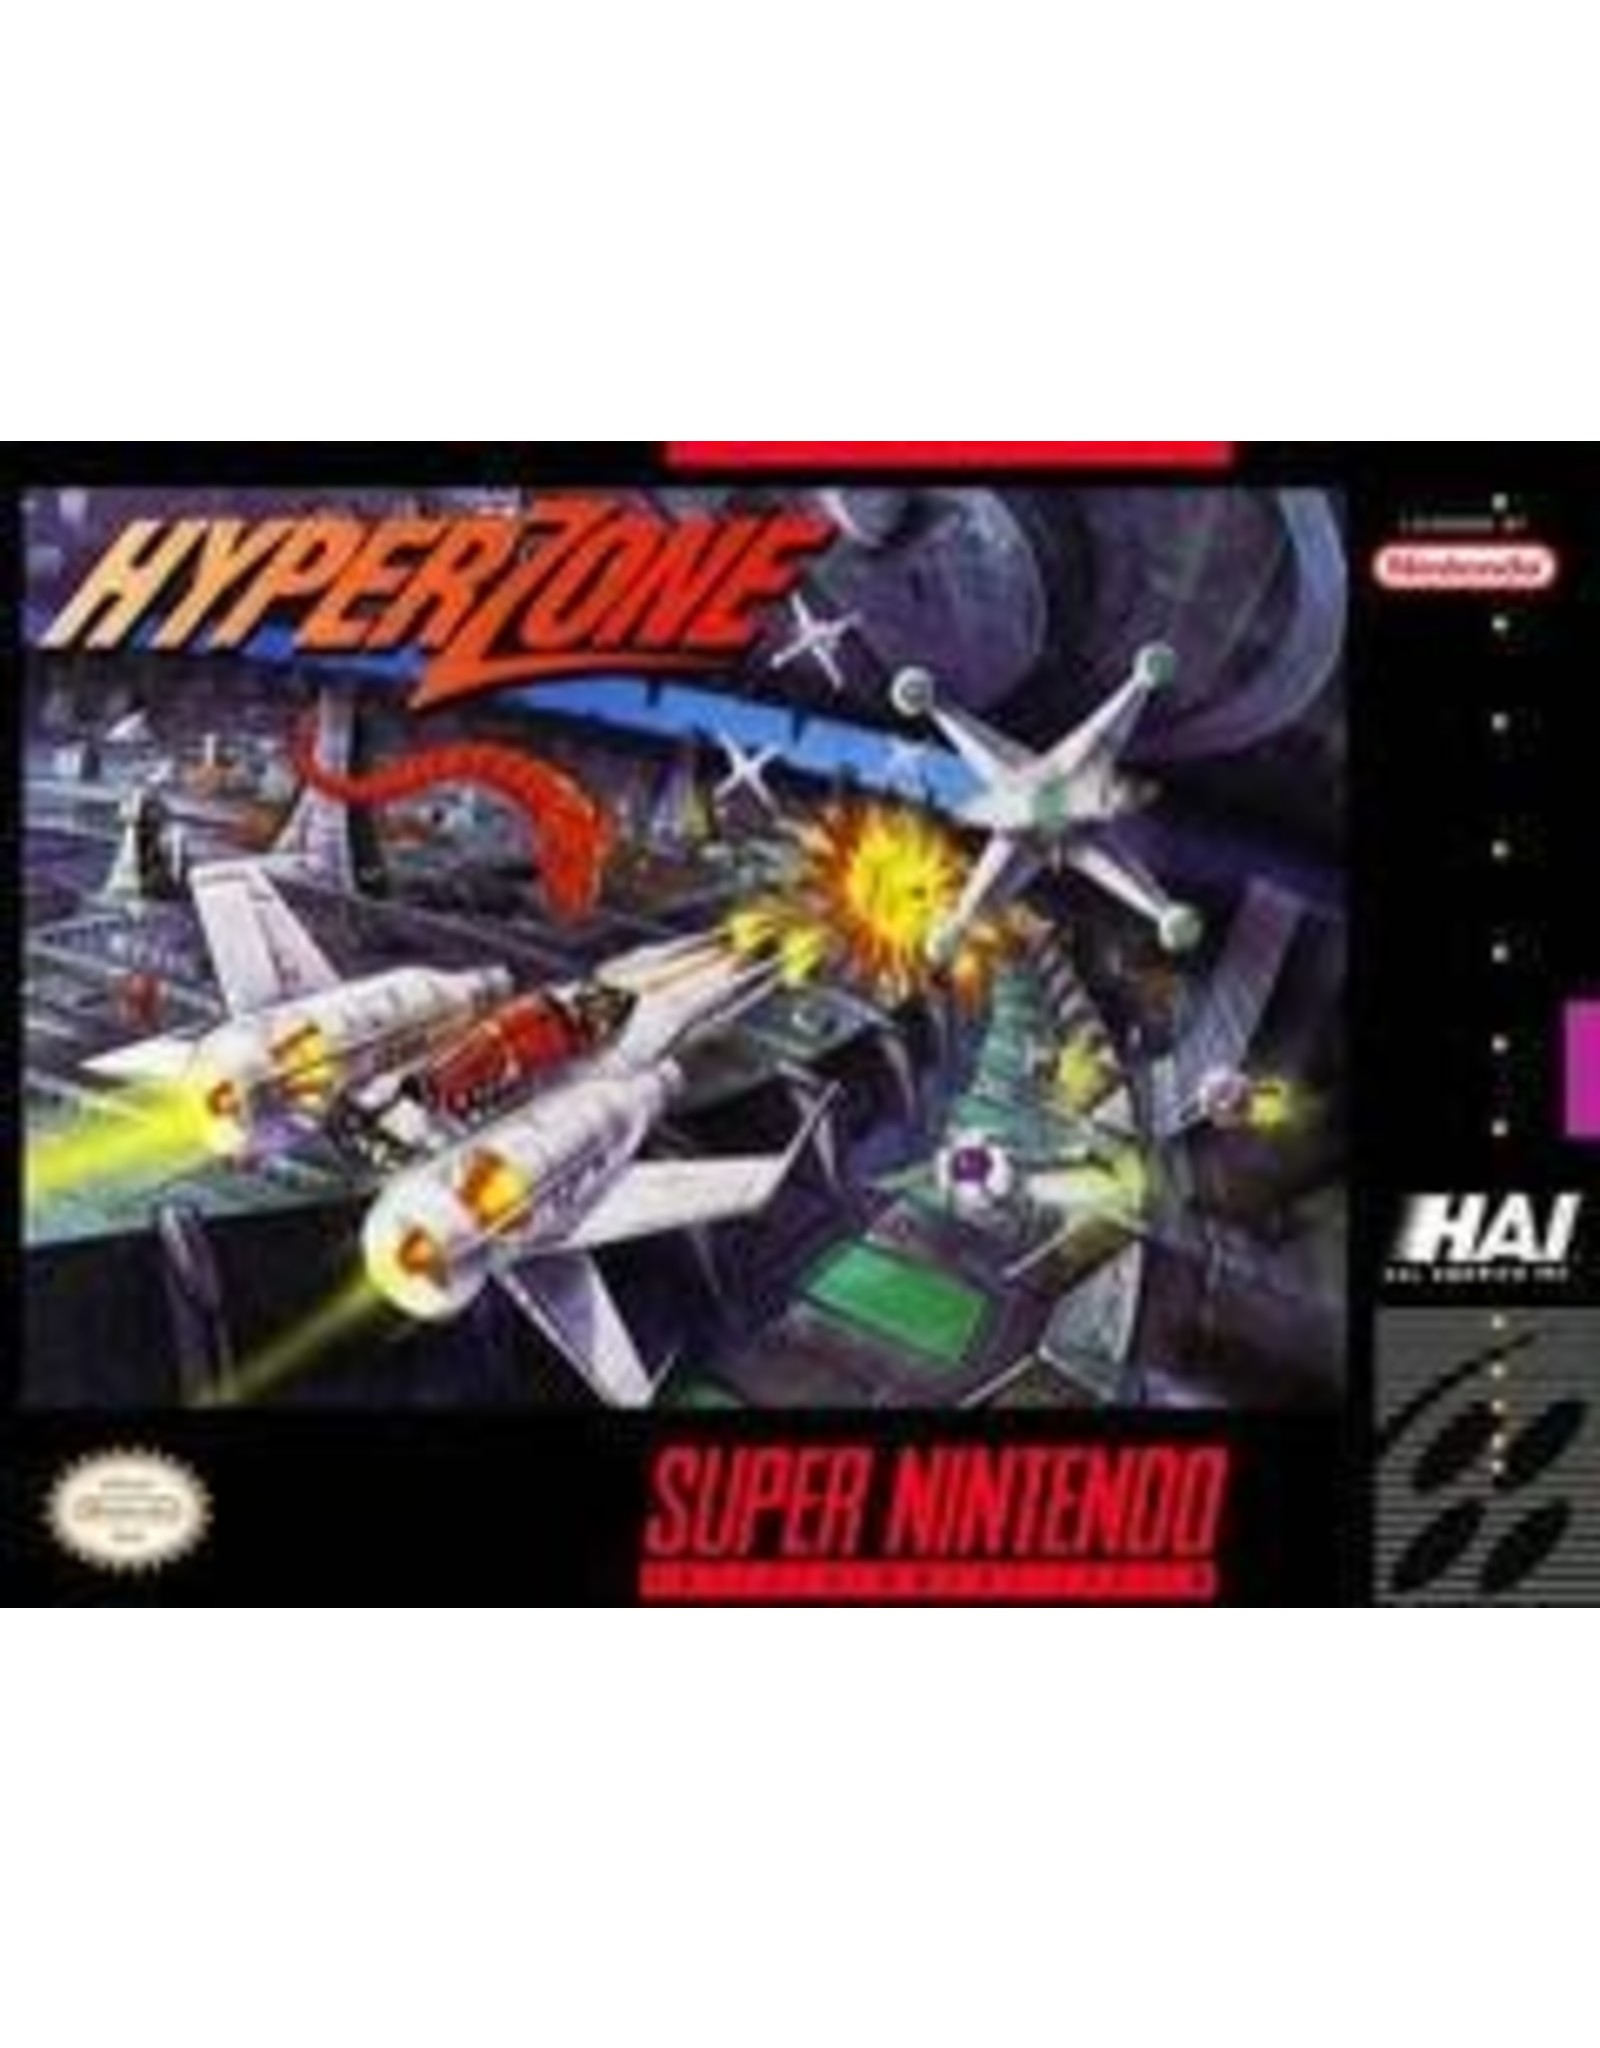 Super Nintendo Hyperzone (CiB, Damaged Box and Manual)